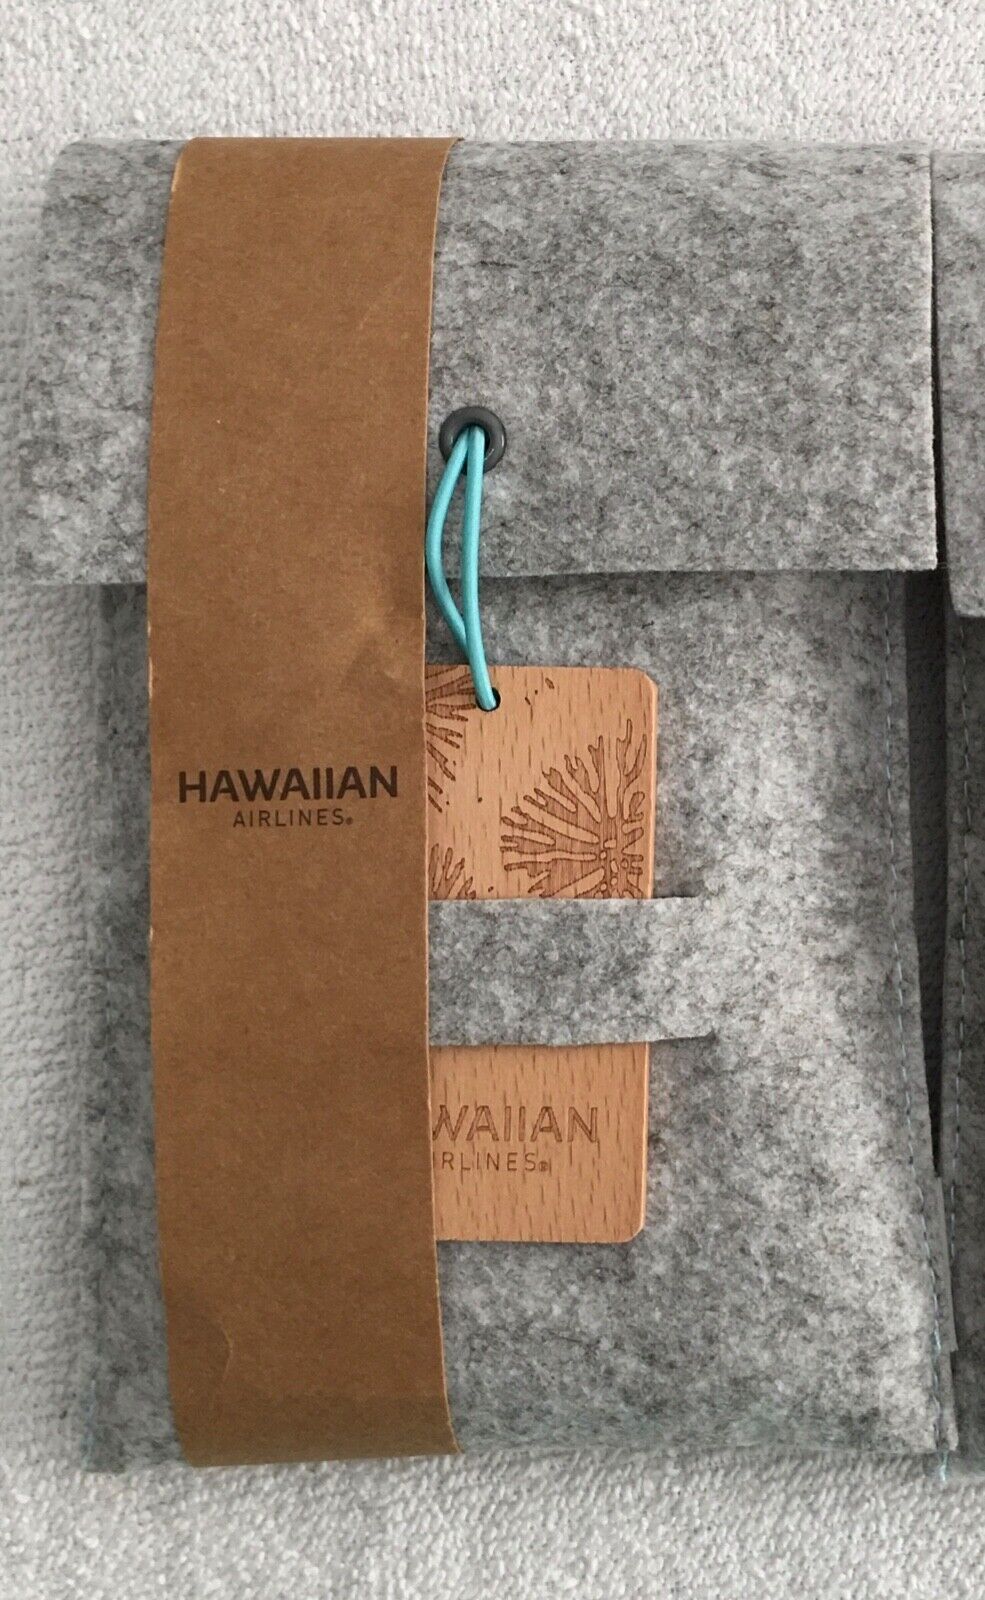 Hawaiian Airlines Business Class Amenity Kit Bag BRAND NEW